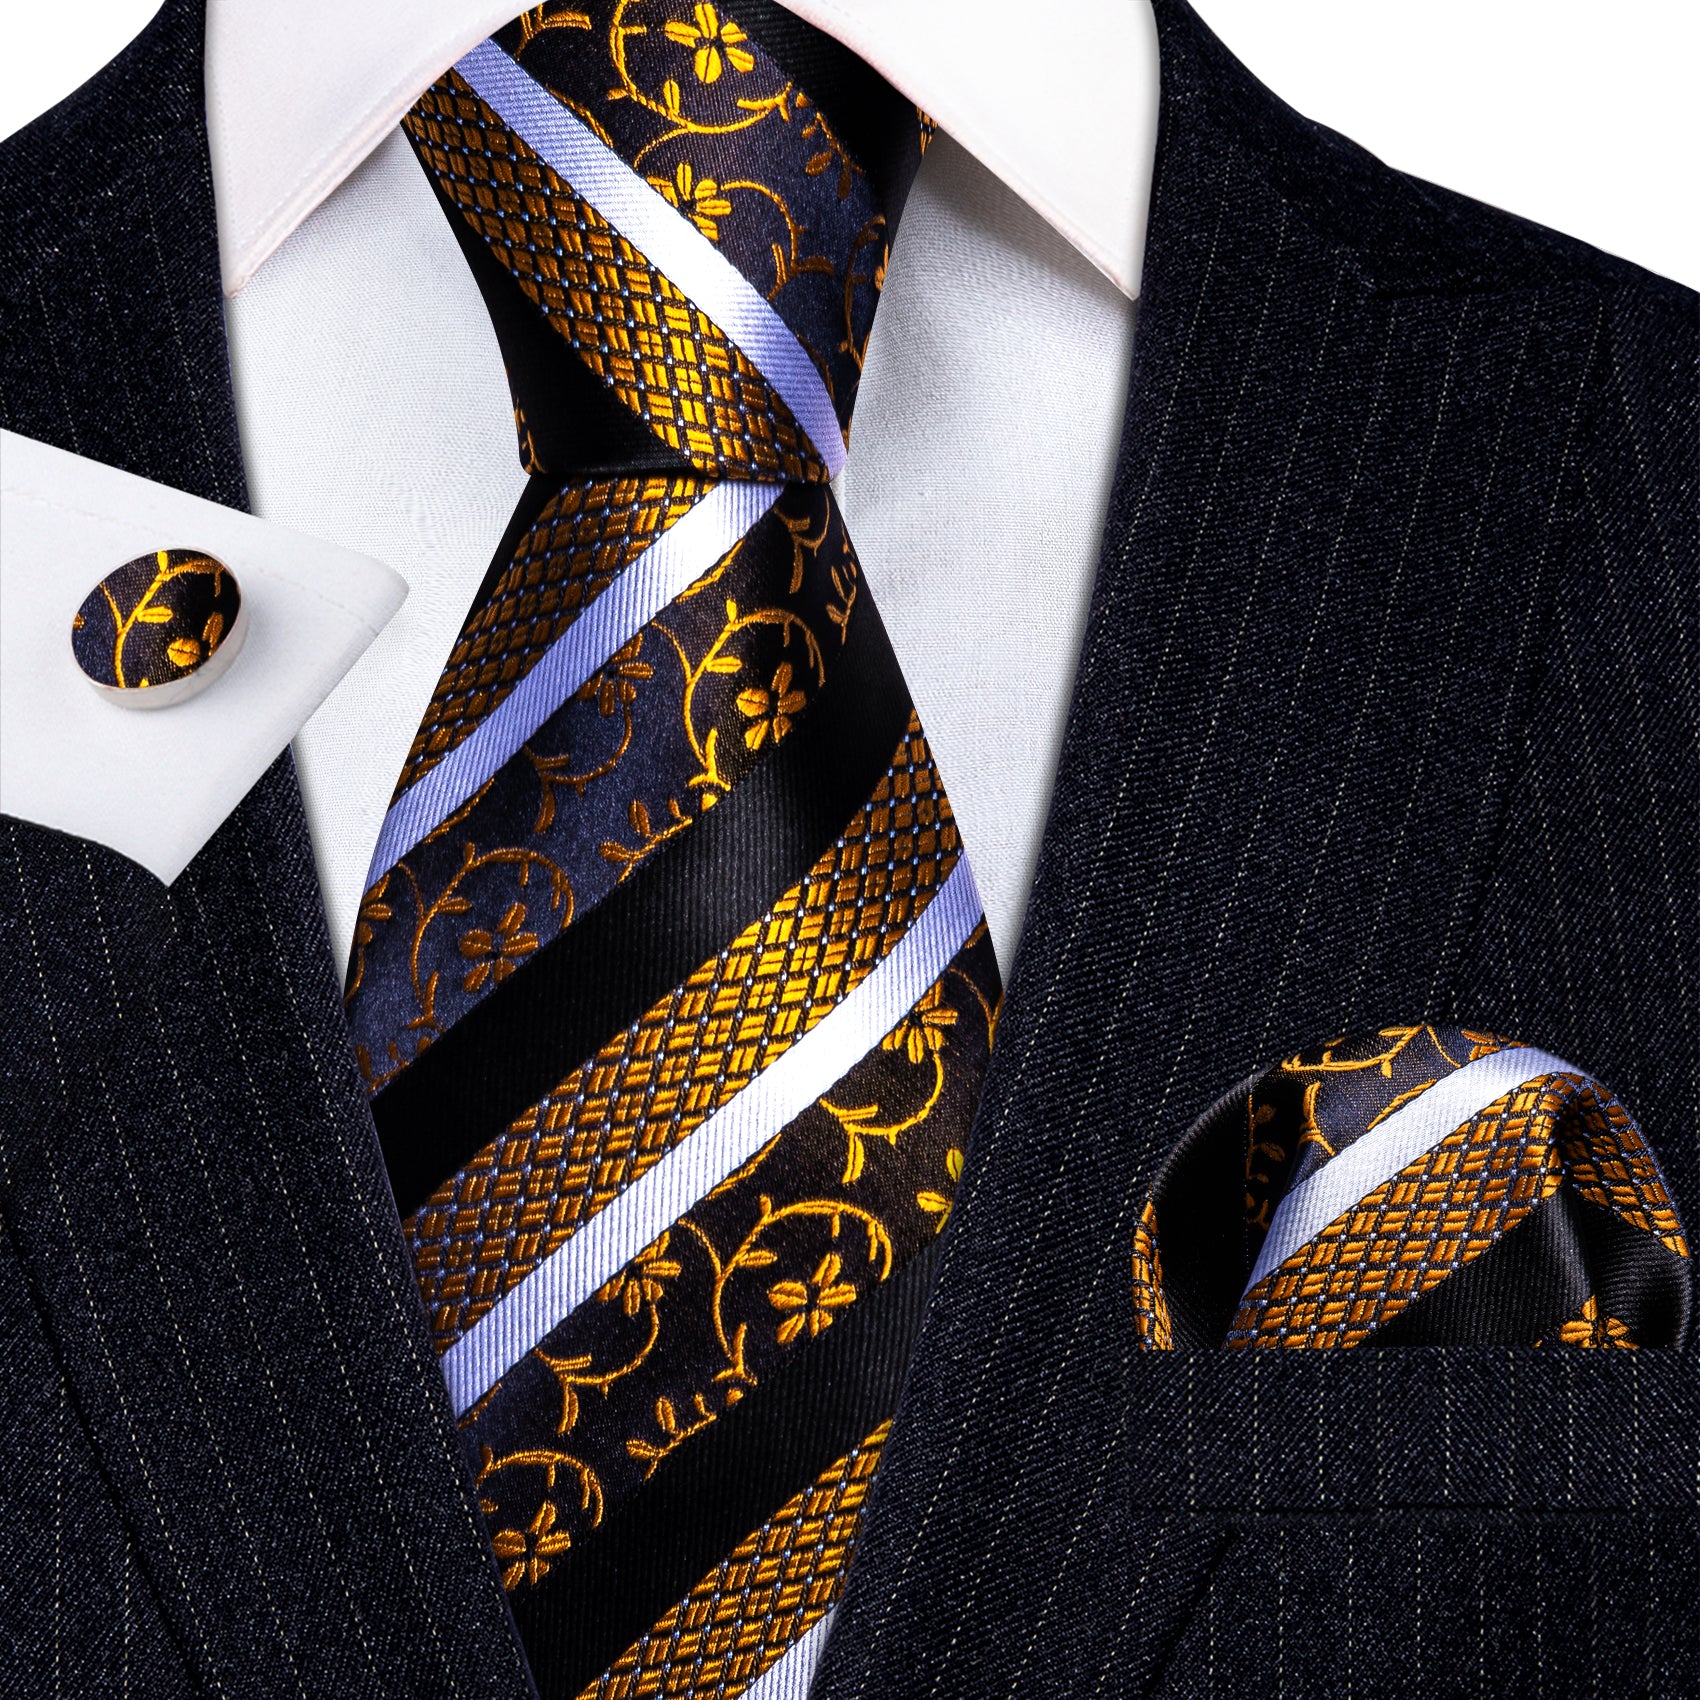 Barry.wang Black Tie Gold Striped Floral Silk Tie Handkerchief Cufflinks Set